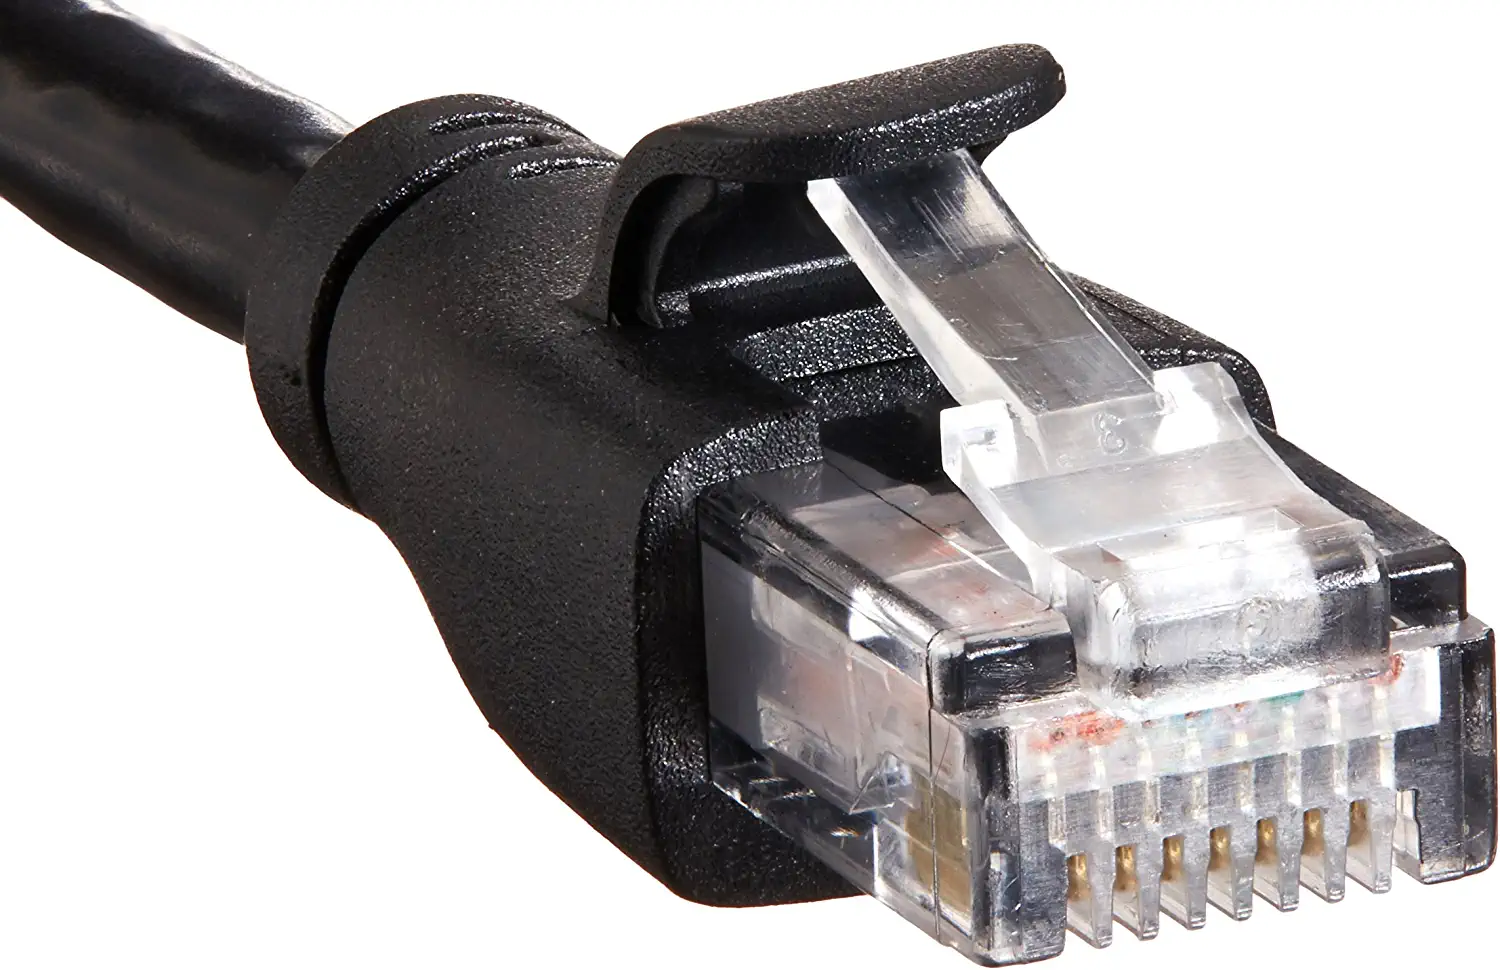 Amazon Basics RJ45 Cat-6 Ethernet Patch Internet Cable - 5 Foot (1.5 Meters)